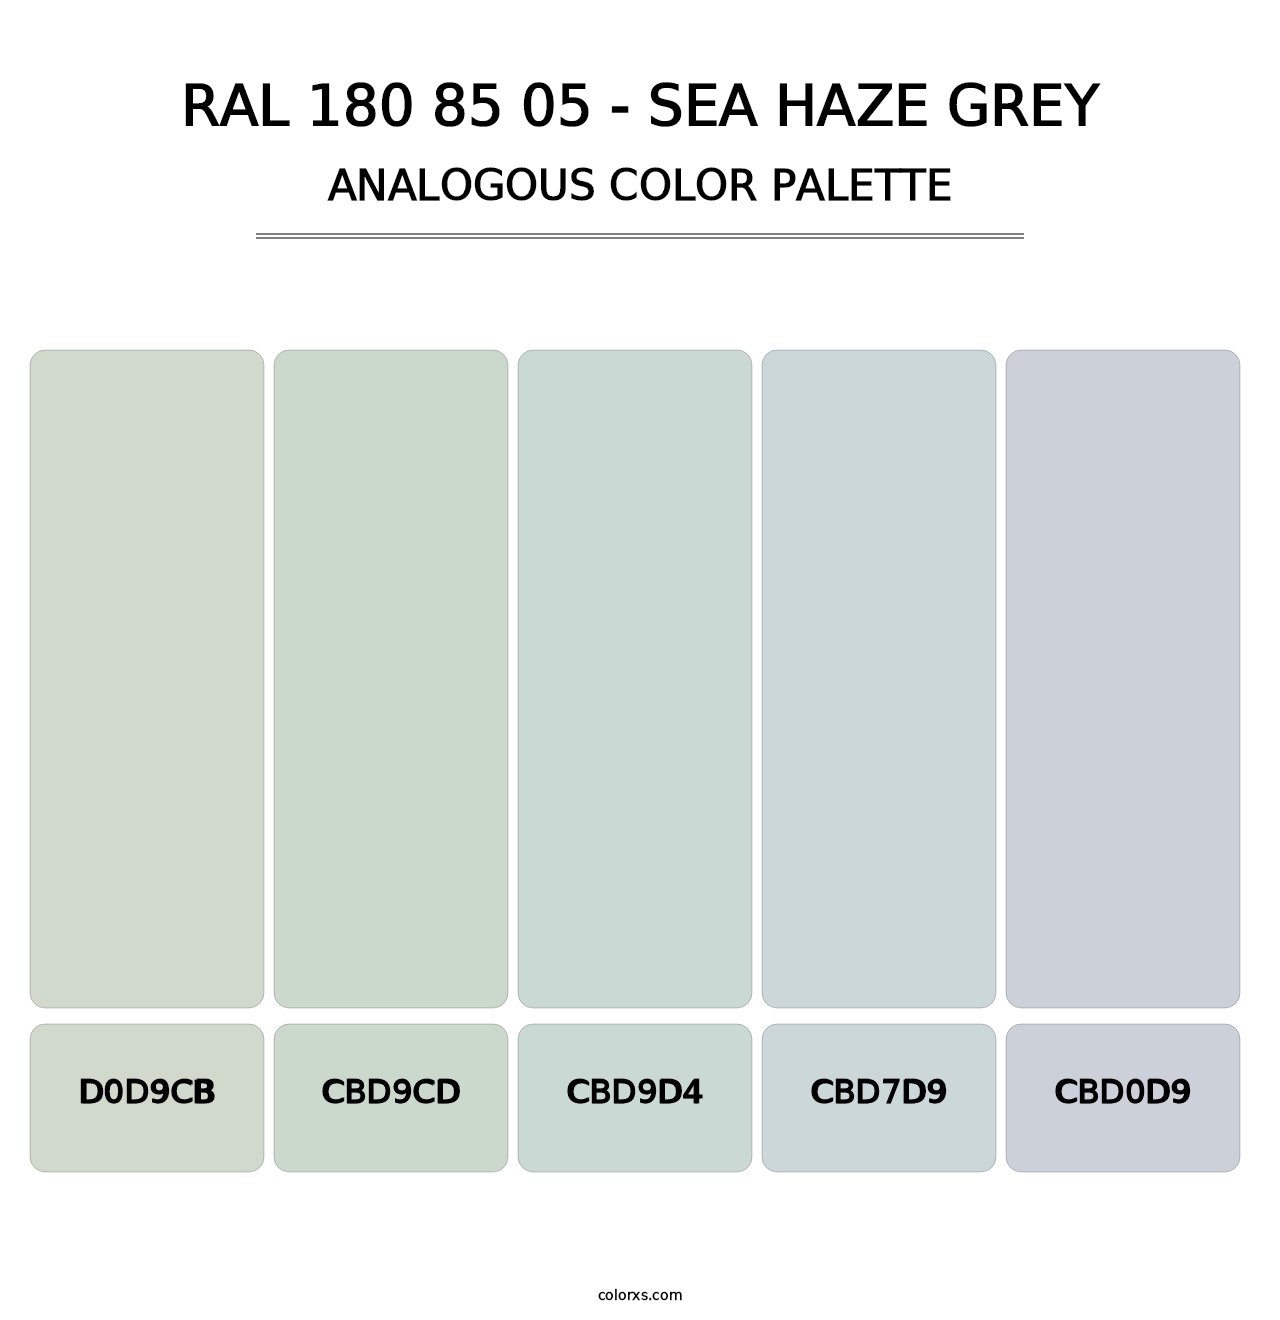 RAL 180 85 05 - Sea Haze Grey - Analogous Color Palette